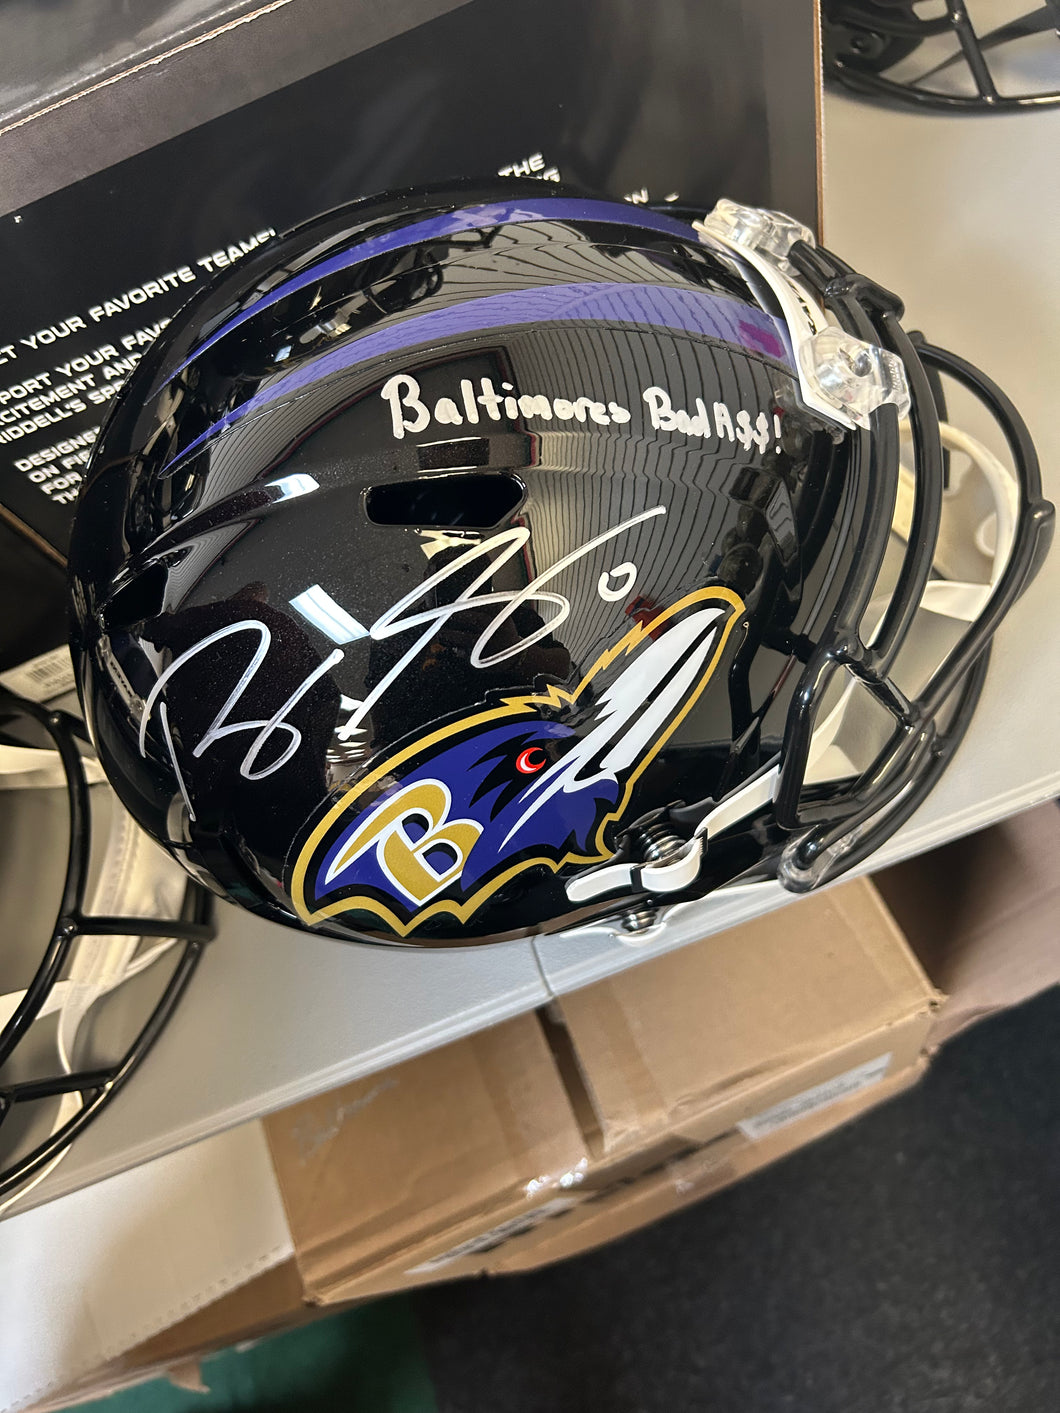 Roquan Smitn signed helmet with inscription Baltimore bada$$